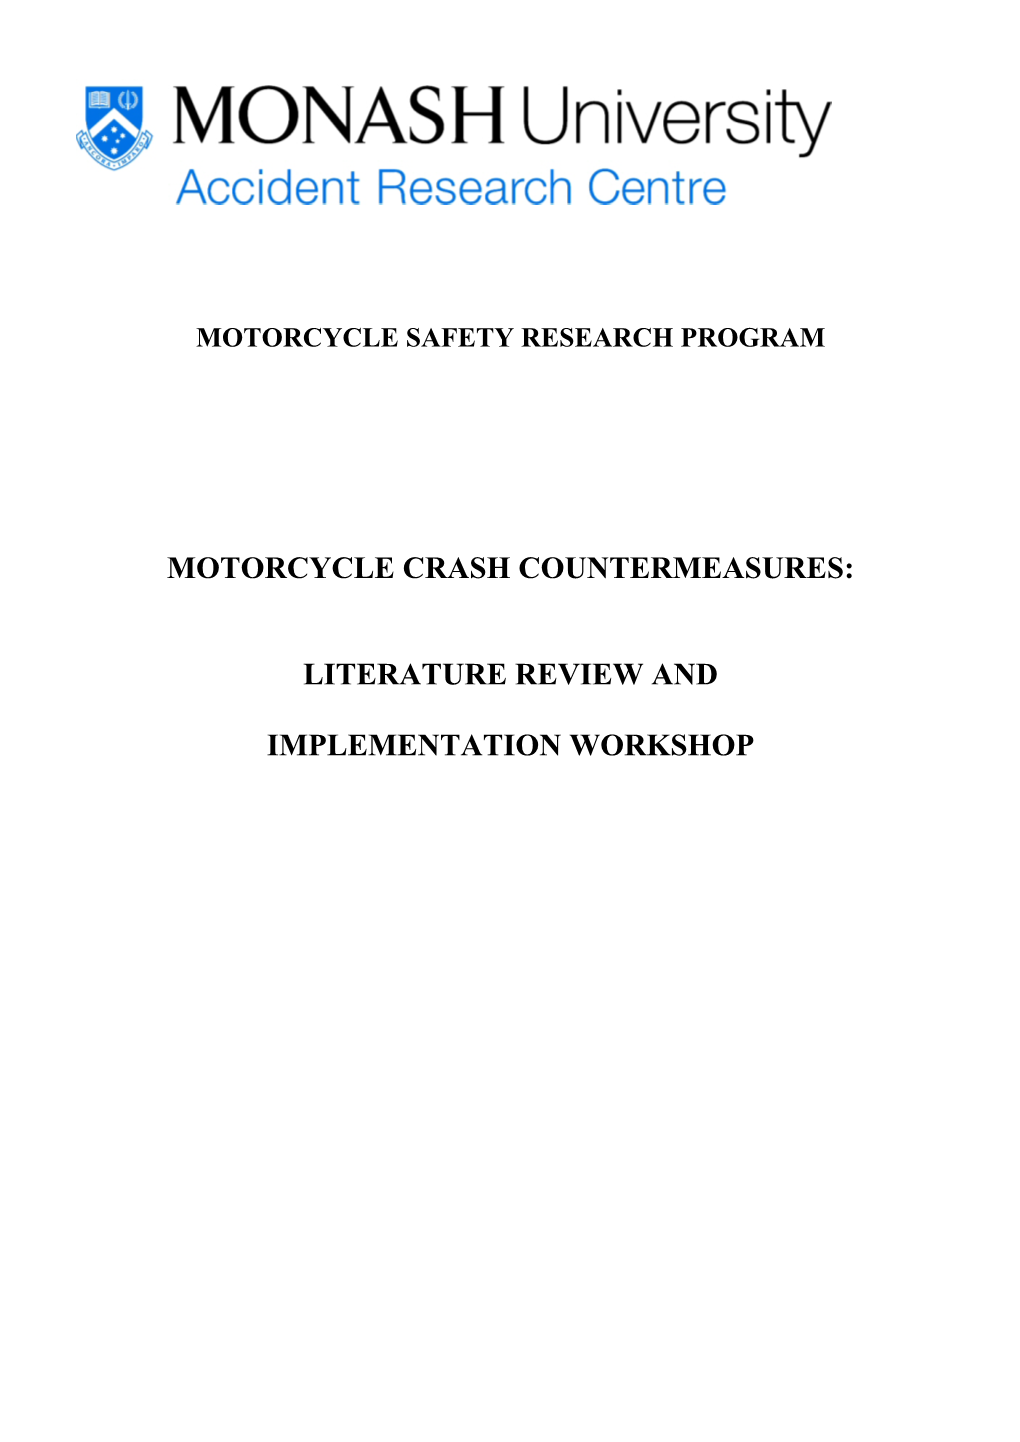 Motorcycle Crash Countermeasures Literature Review